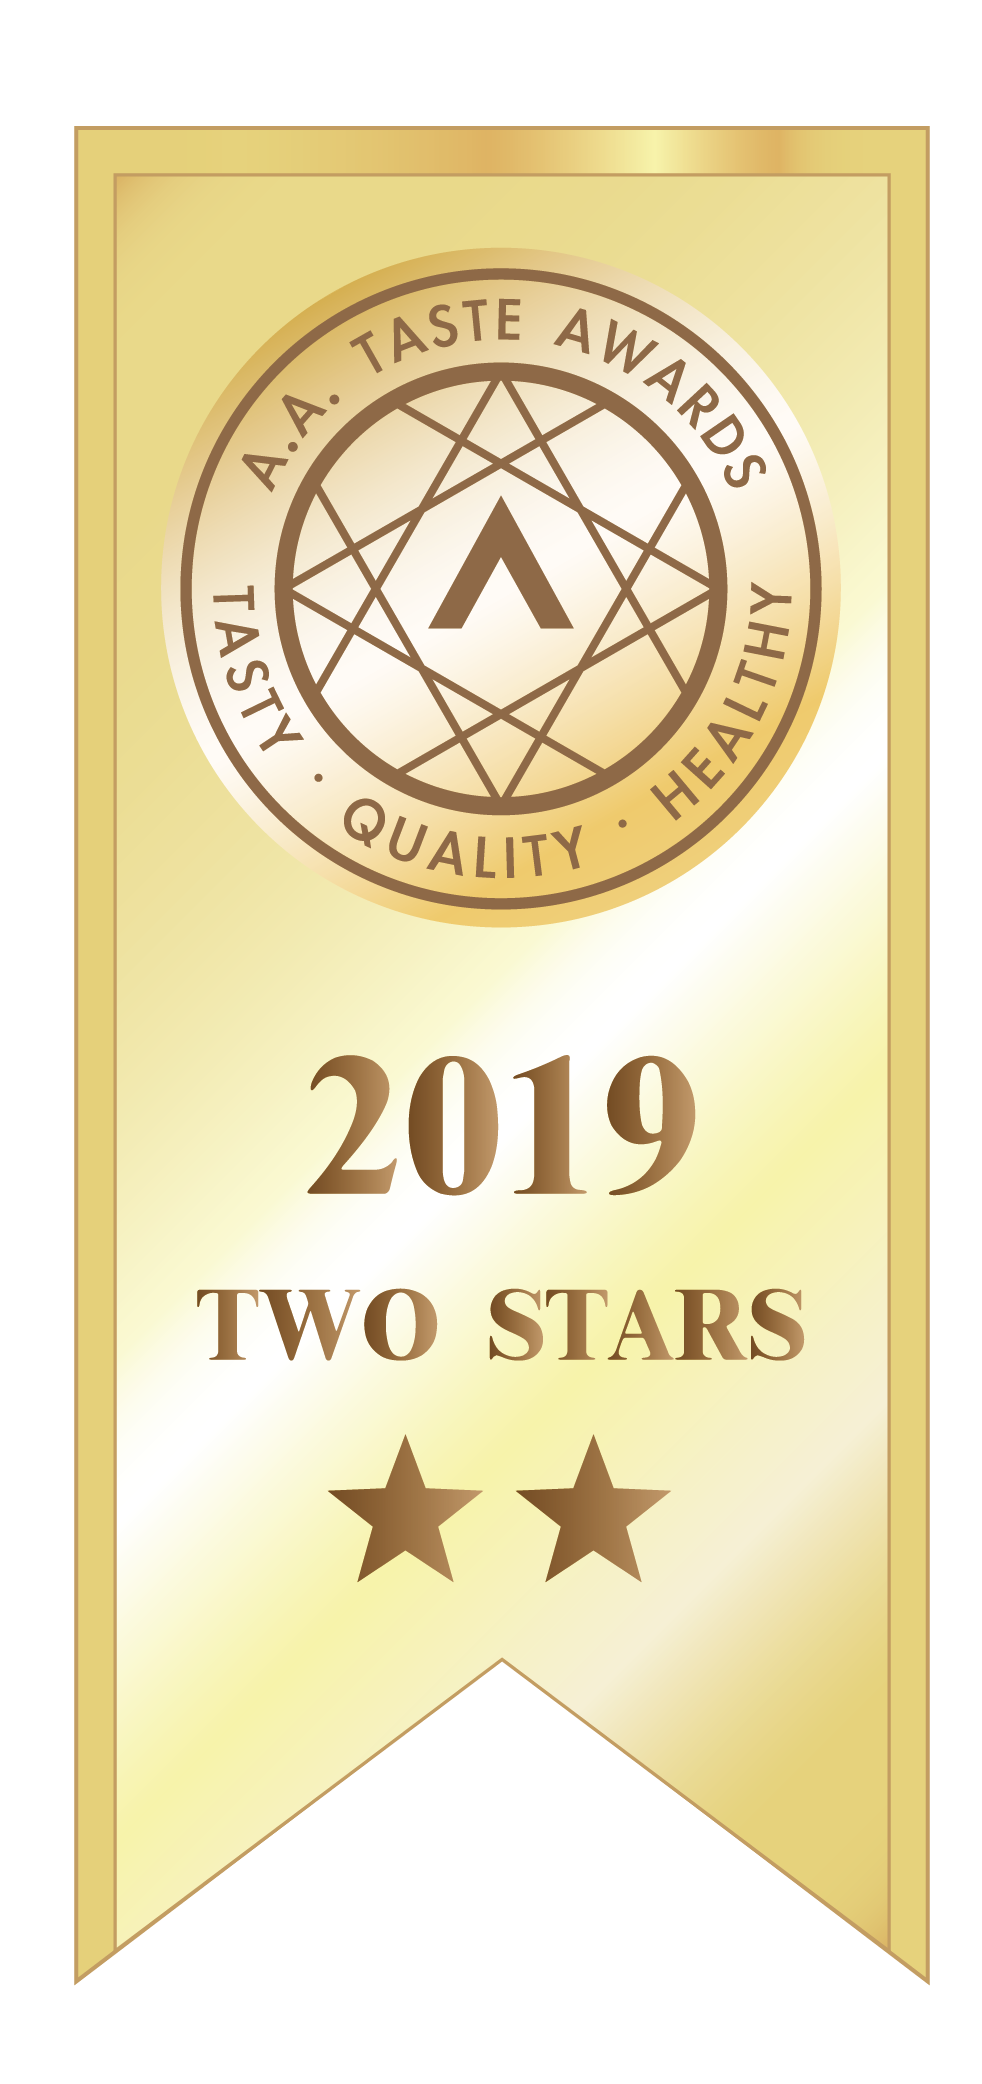 A.A. Taste Awards 2019 Two stars